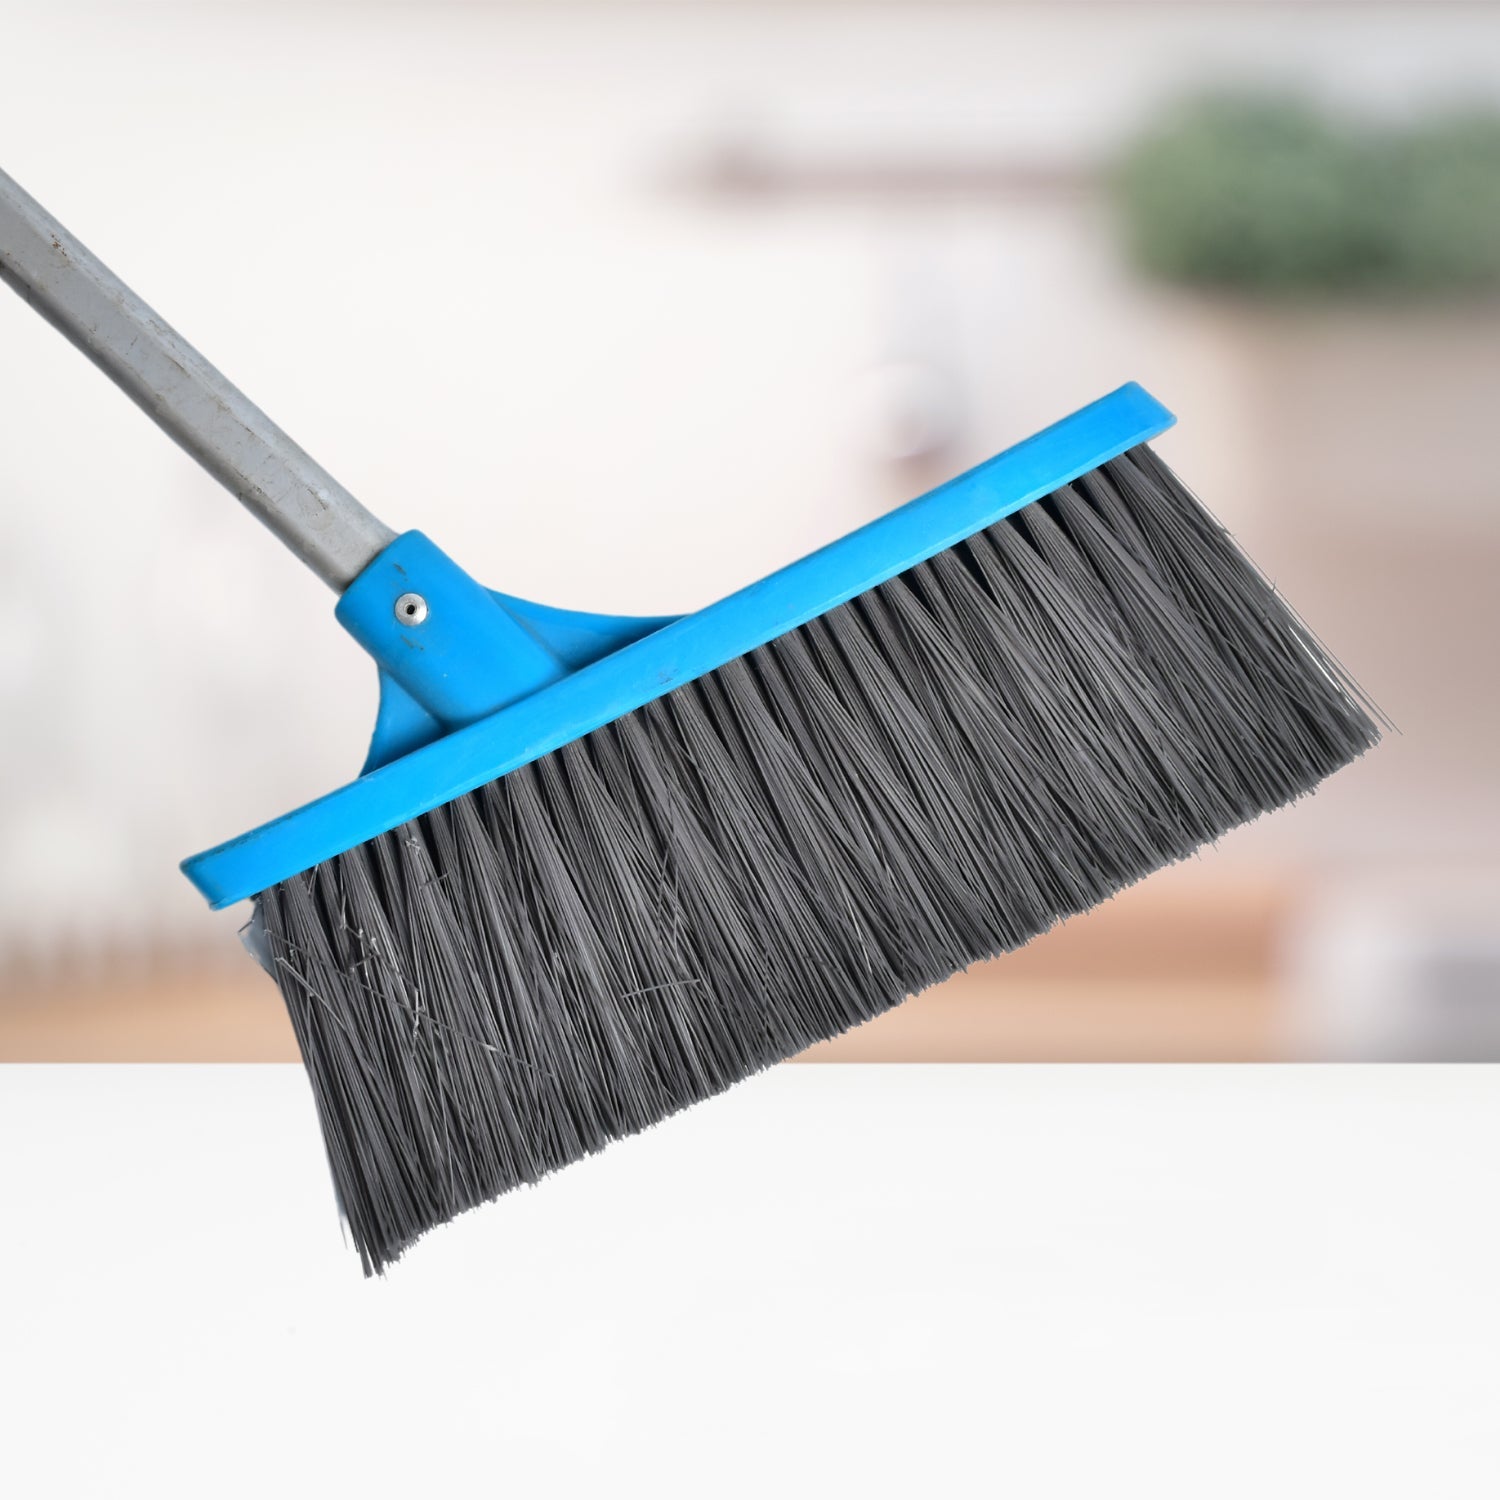 7880  Long Handle - Floor Scrub Brushes for Cleaning Shower, Stiff Bristle Scrubber Brush for Bathroom, Bathtub, Tub, Tile Floors, Garage